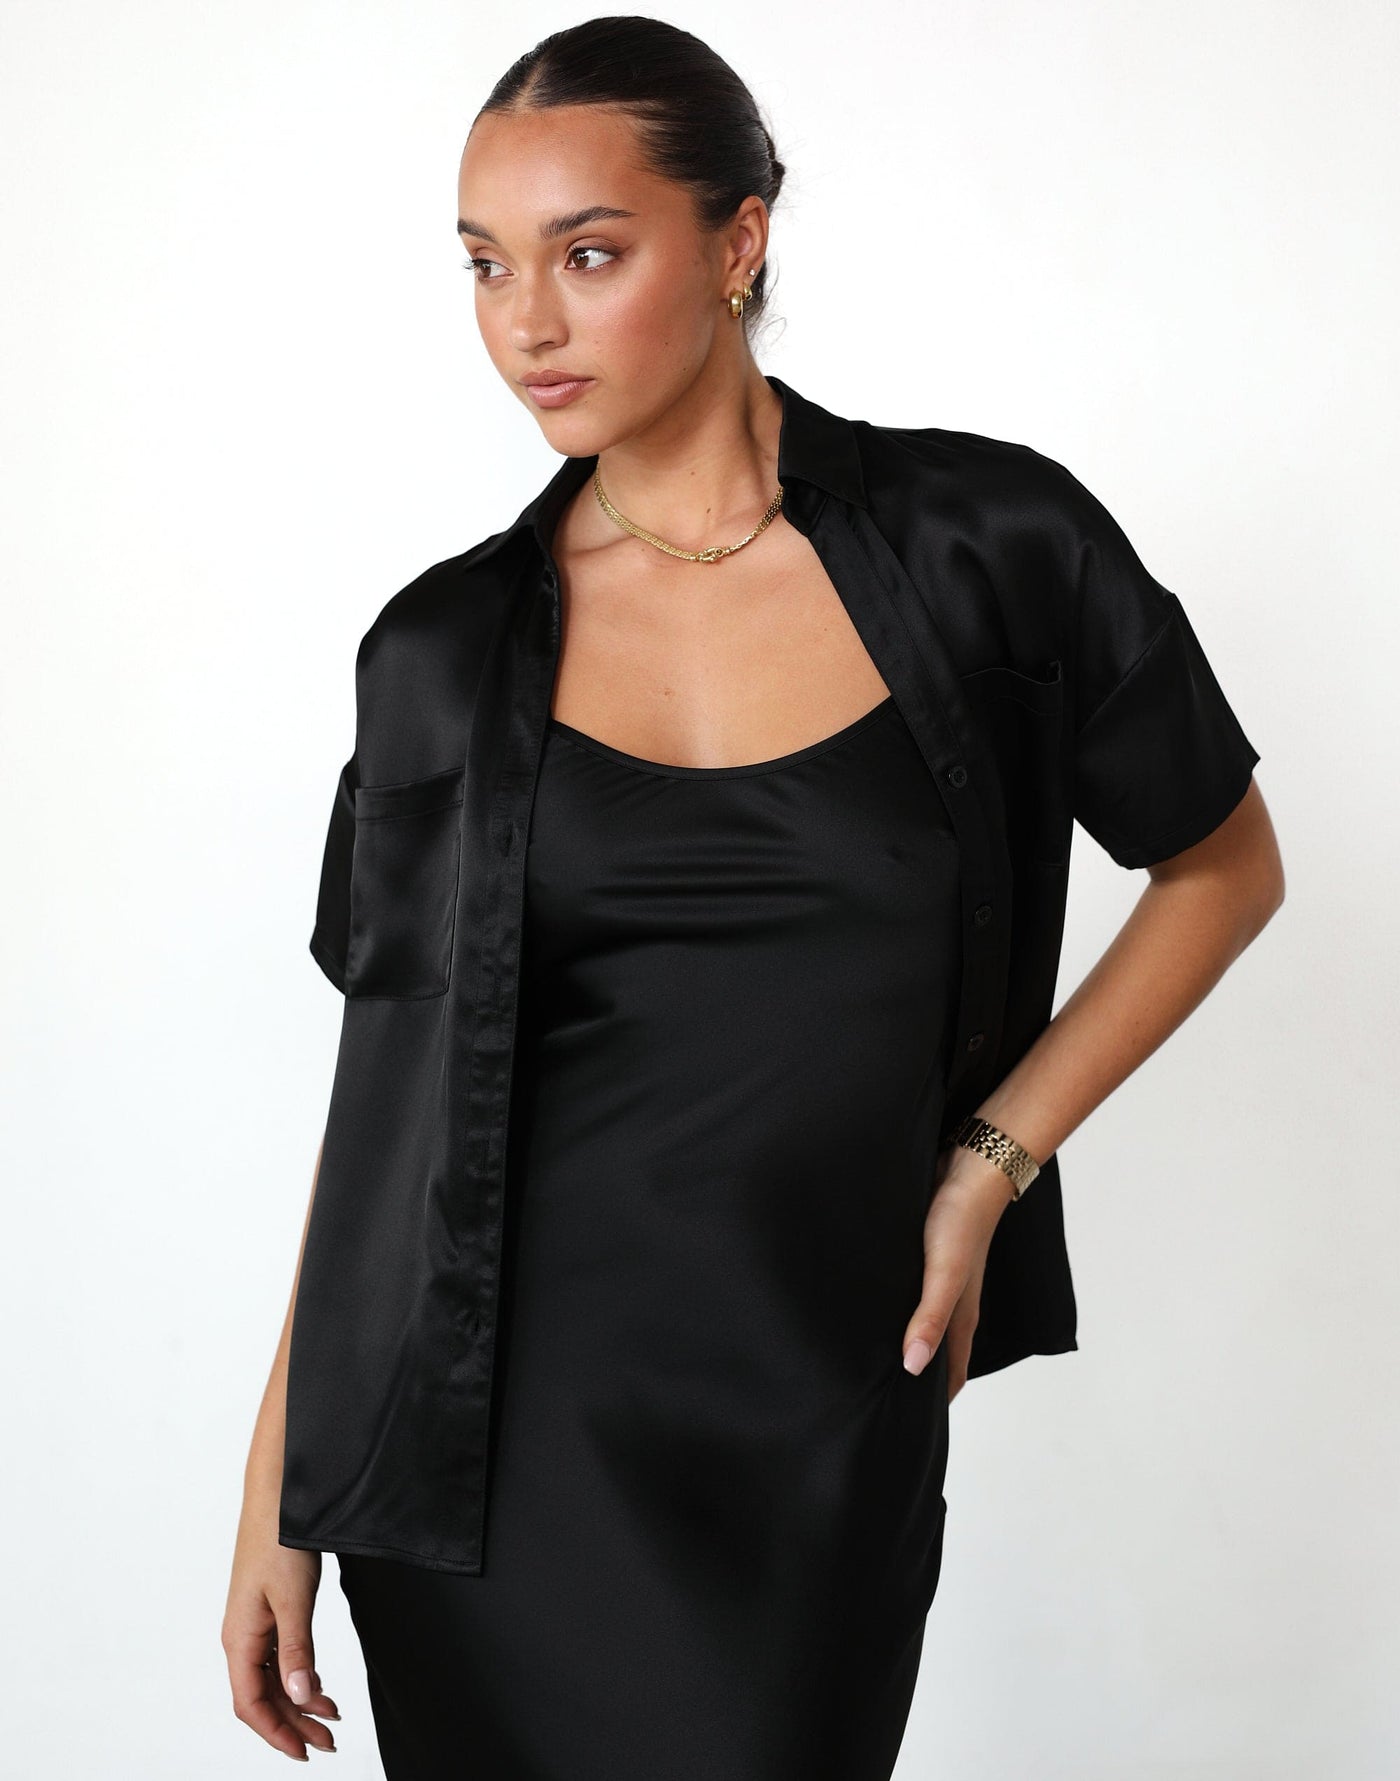 Martha Shirt (Black) - Satin Button-Up Shirt - Women's Top - Charcoal Clothing